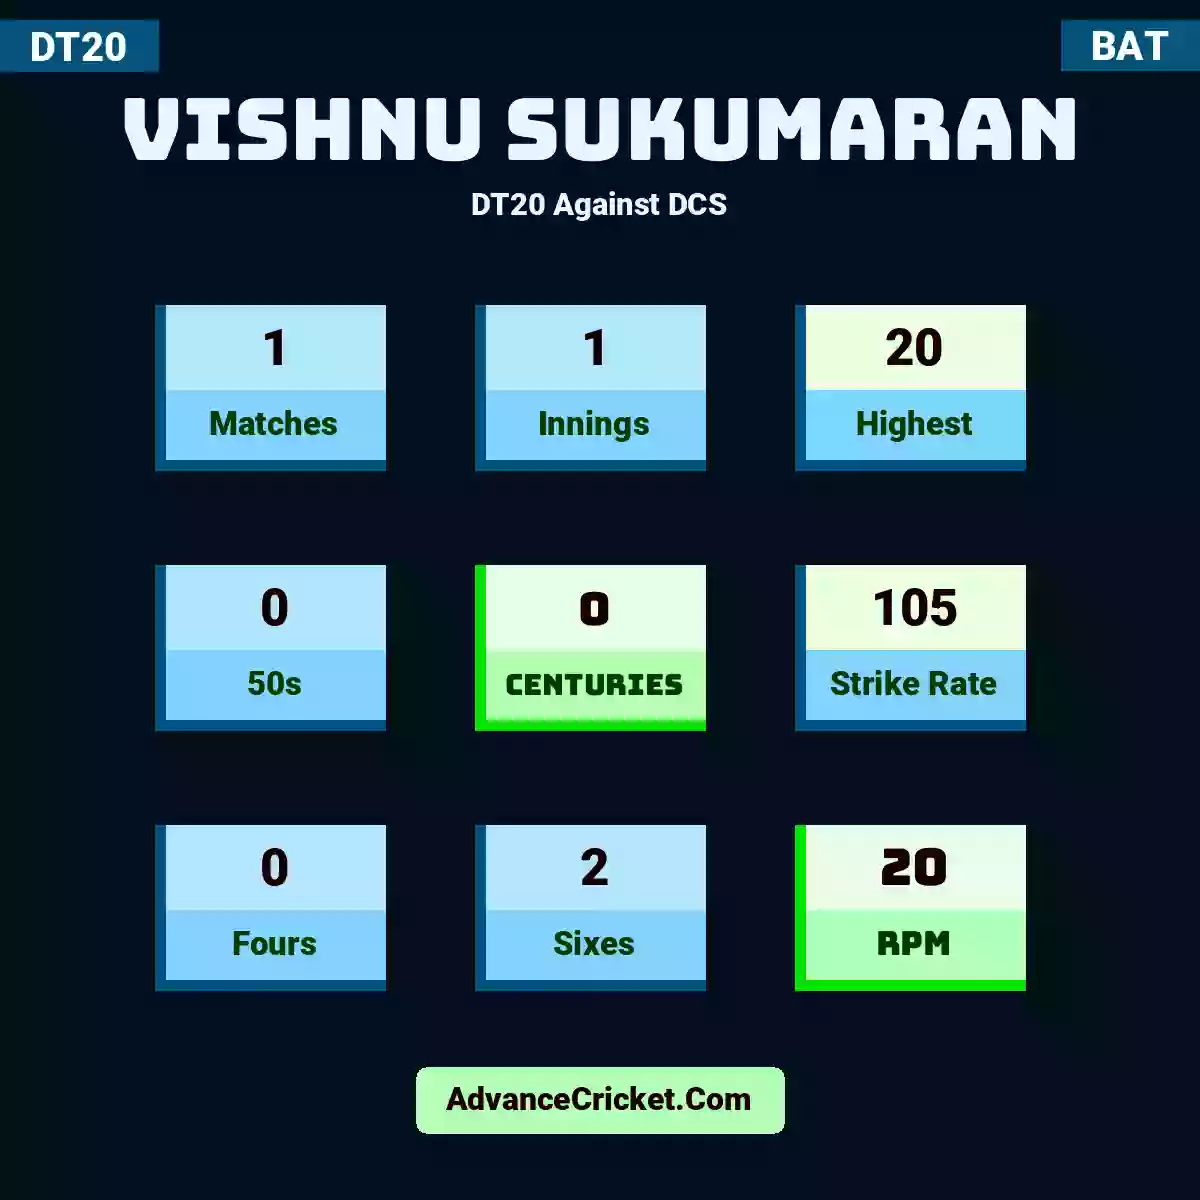 Vishnu Sukumaran DT20  Against DCS, Vishnu Sukumaran played 1 matches, scored 20 runs as highest, 0 half-centuries, and 0 centuries, with a strike rate of 105. V.Sukumaran hit 0 fours and 2 sixes, with an RPM of 20.